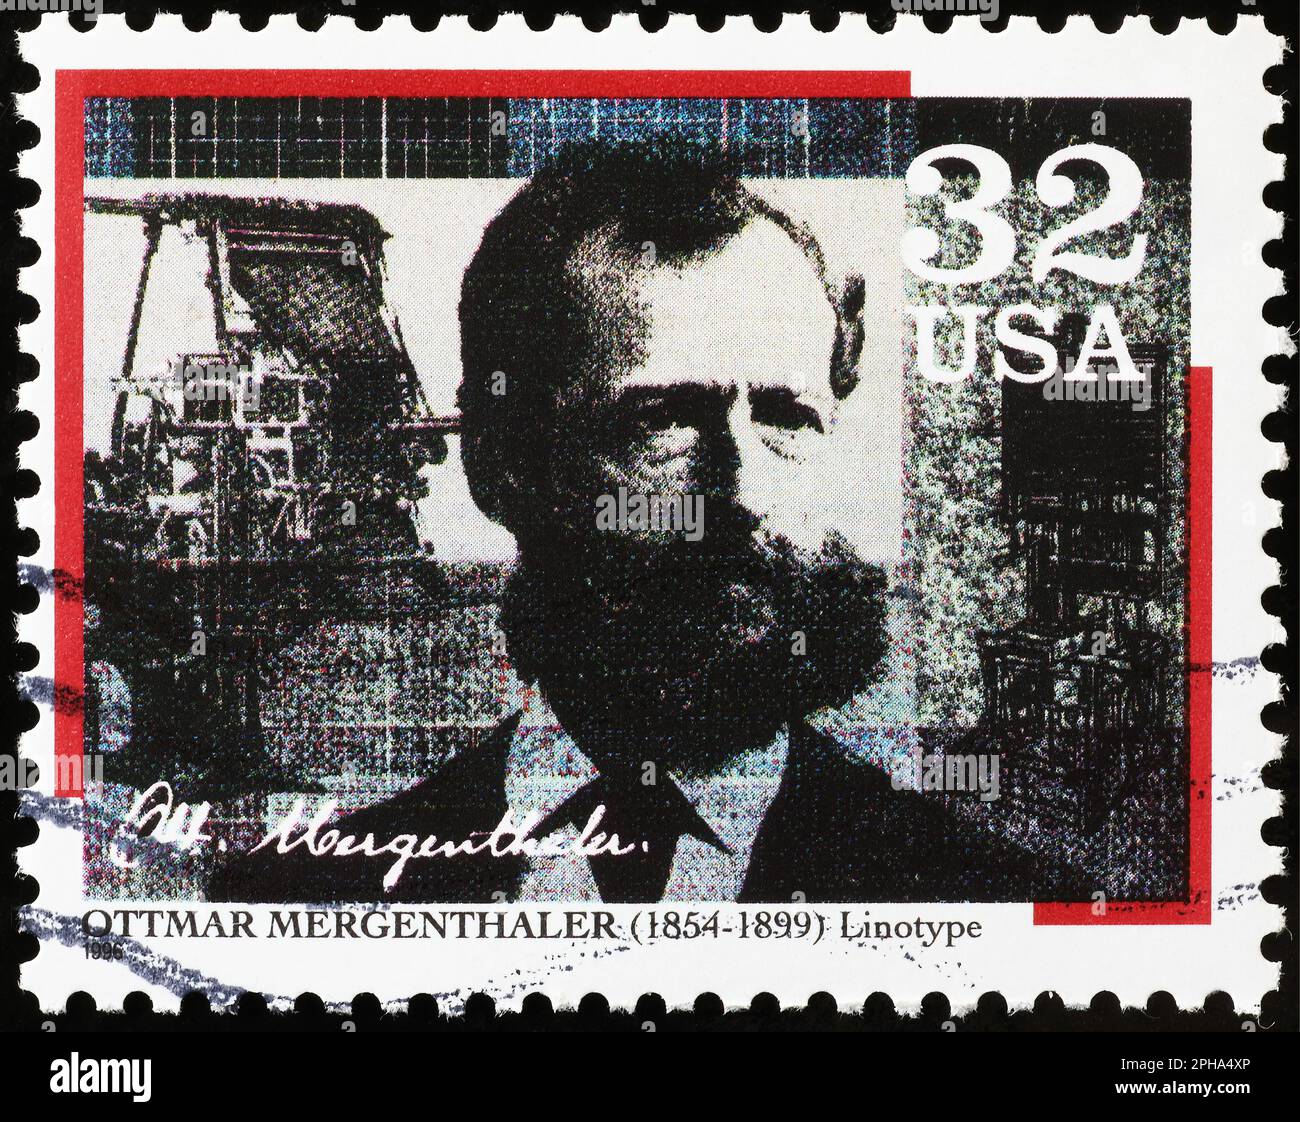 German-American inventor Ottmar Mergenthaler on postage stamp Stock Photo